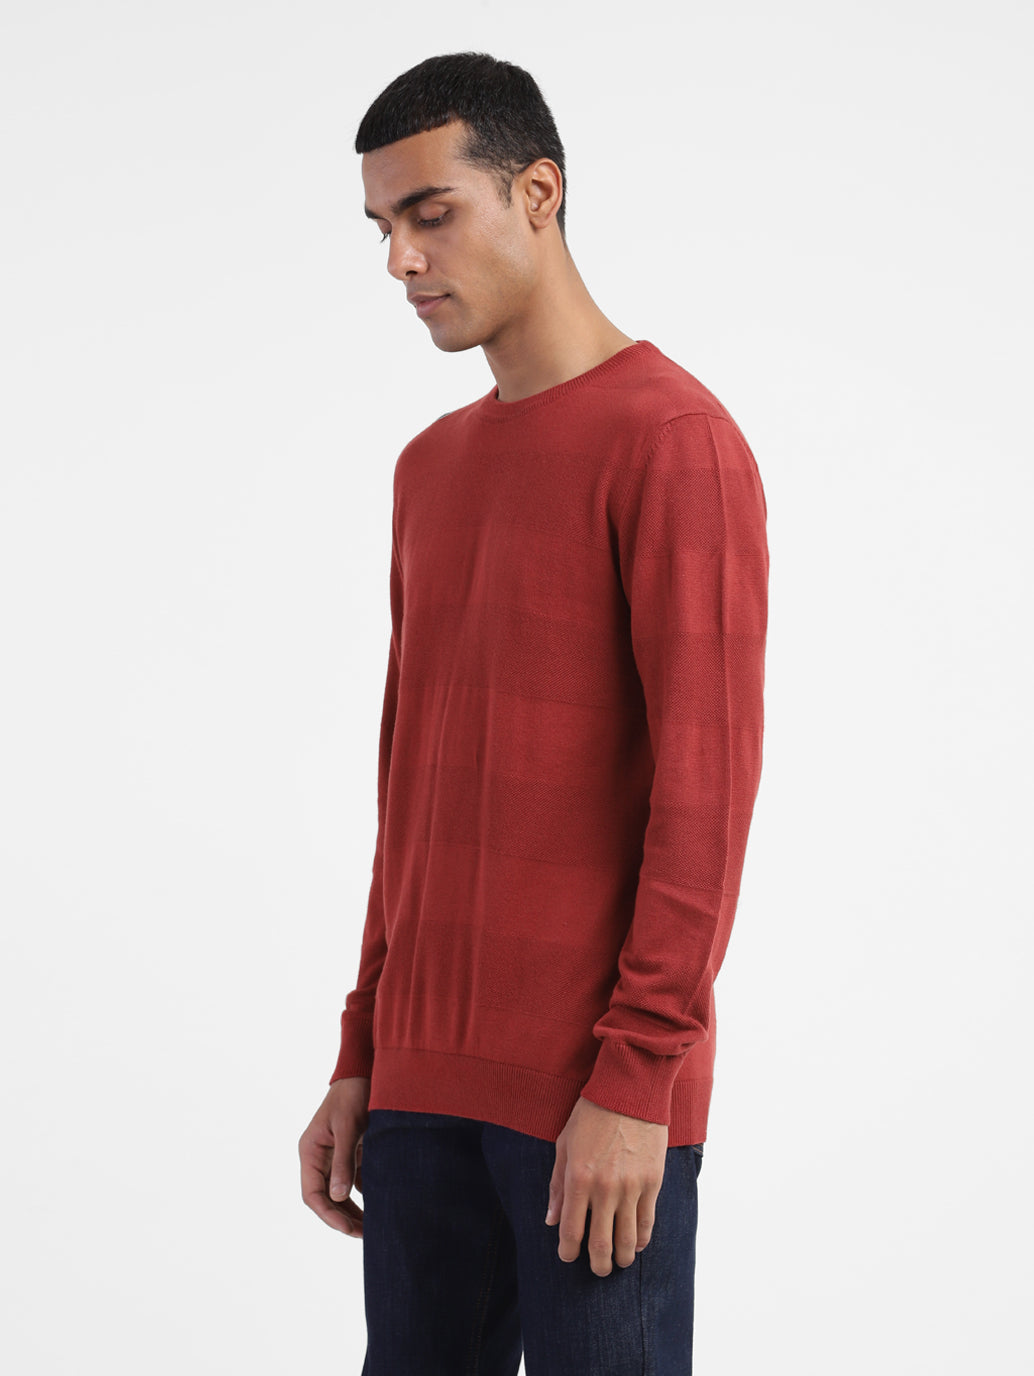 Men's Solid Crew Neck Sweater Red